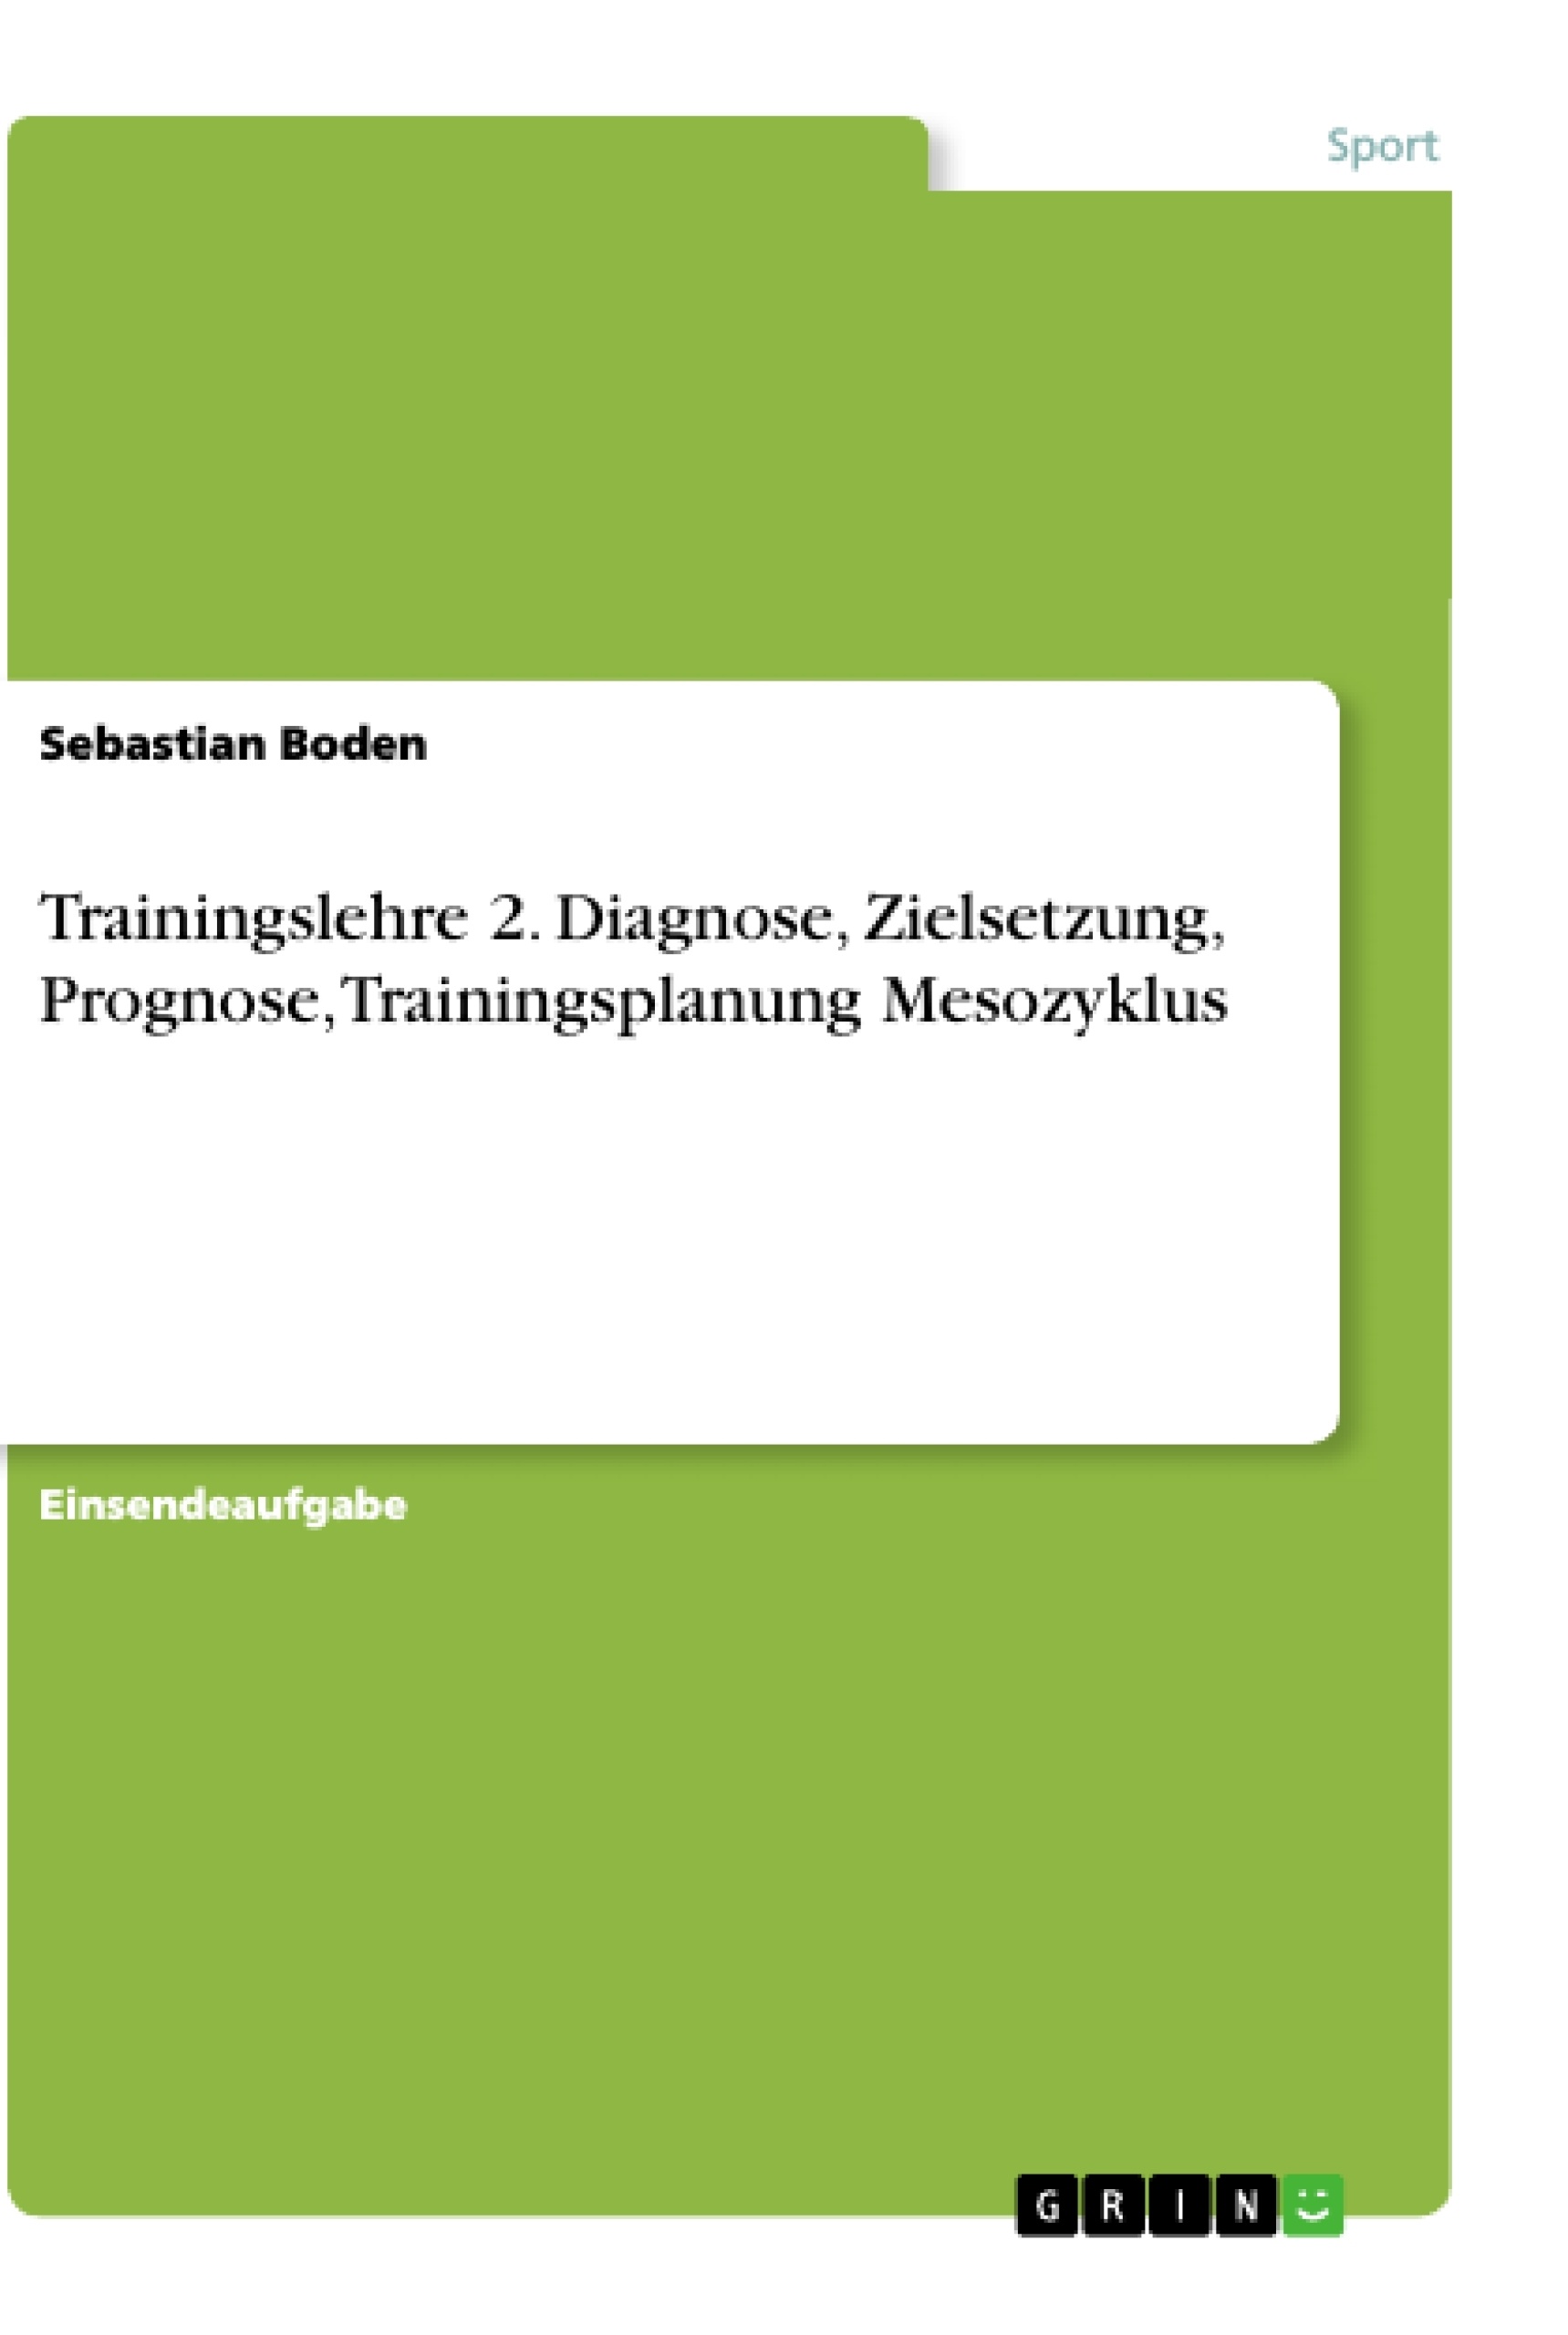 Title: Trainingslehre 2. Diagnose, Zielsetzung, Prognose, Trainingsplanung Mesozyklus